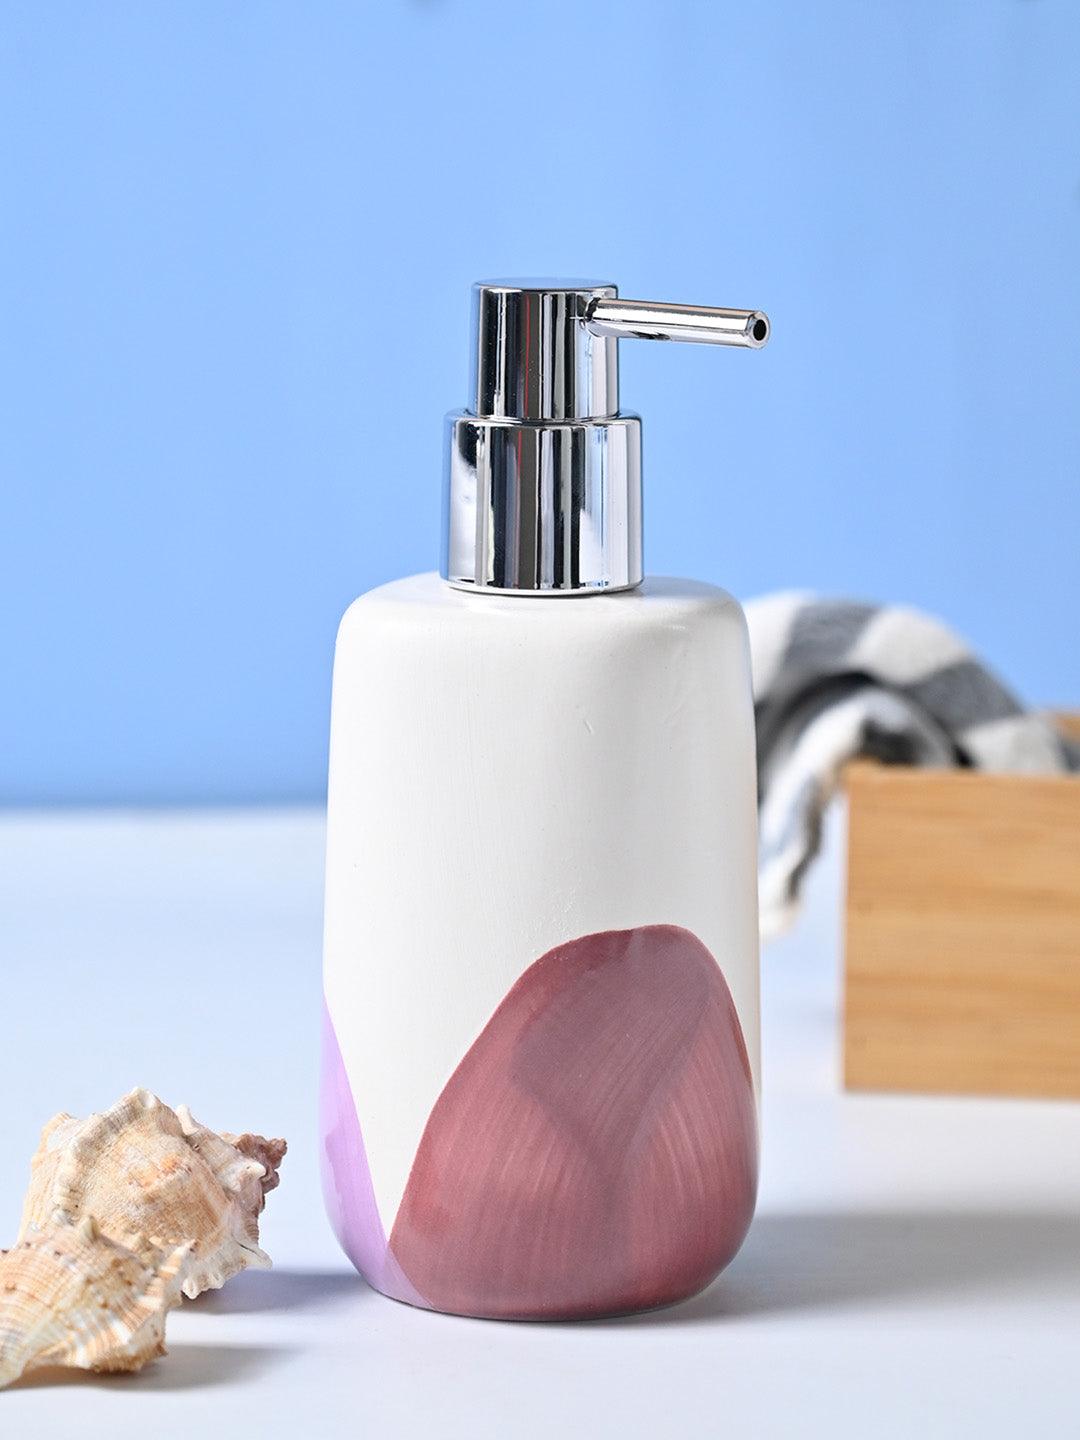 VON CASA 'Off White & Asymmetric' Soap Dispenser - 360mL